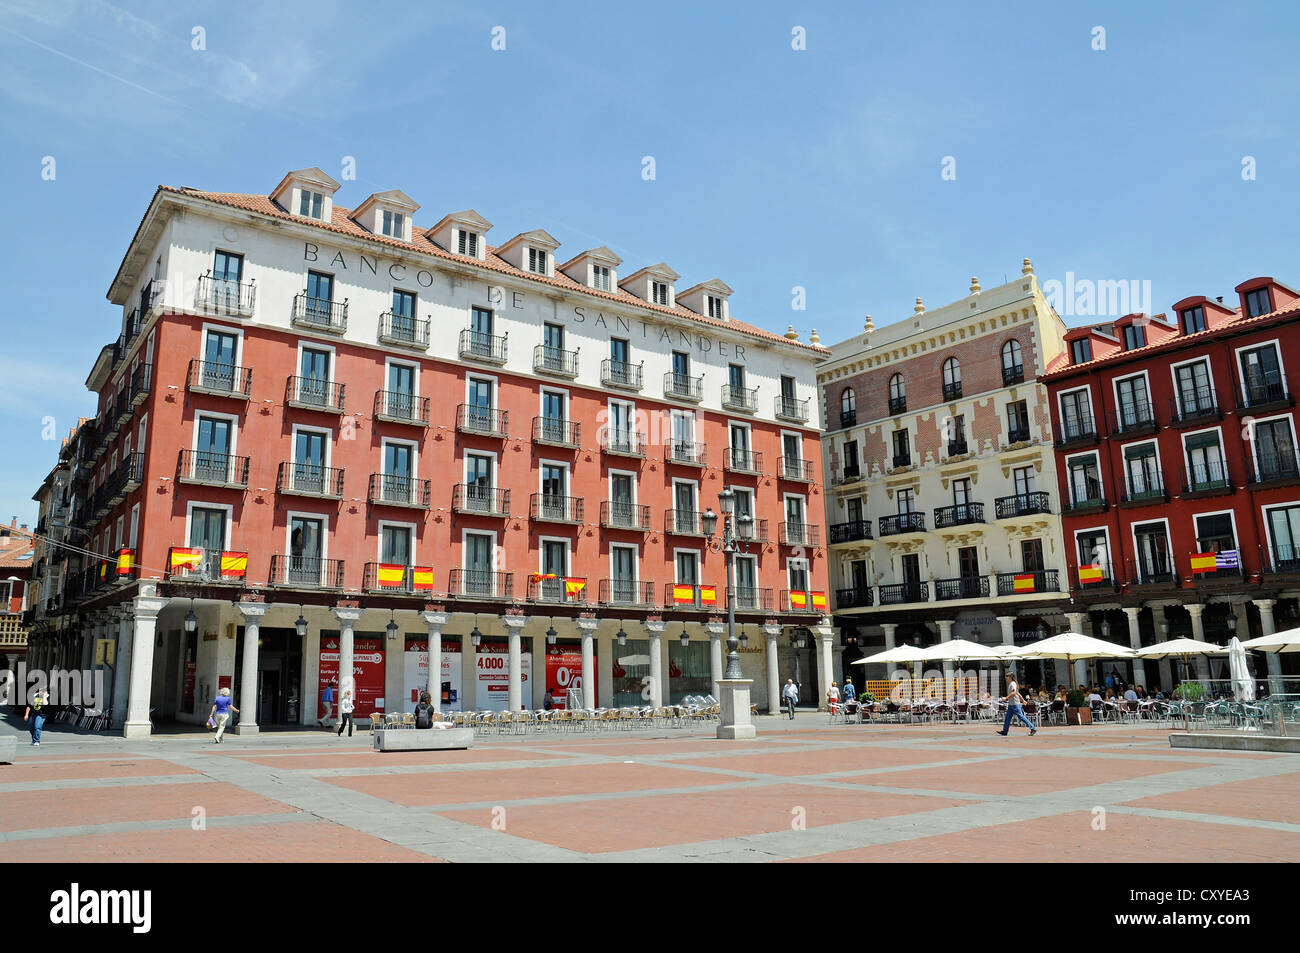 Plaza Mayor square, Banco de Santander bank building, Valladolid, Castile and Leon, Spain, Europe Stock Photo